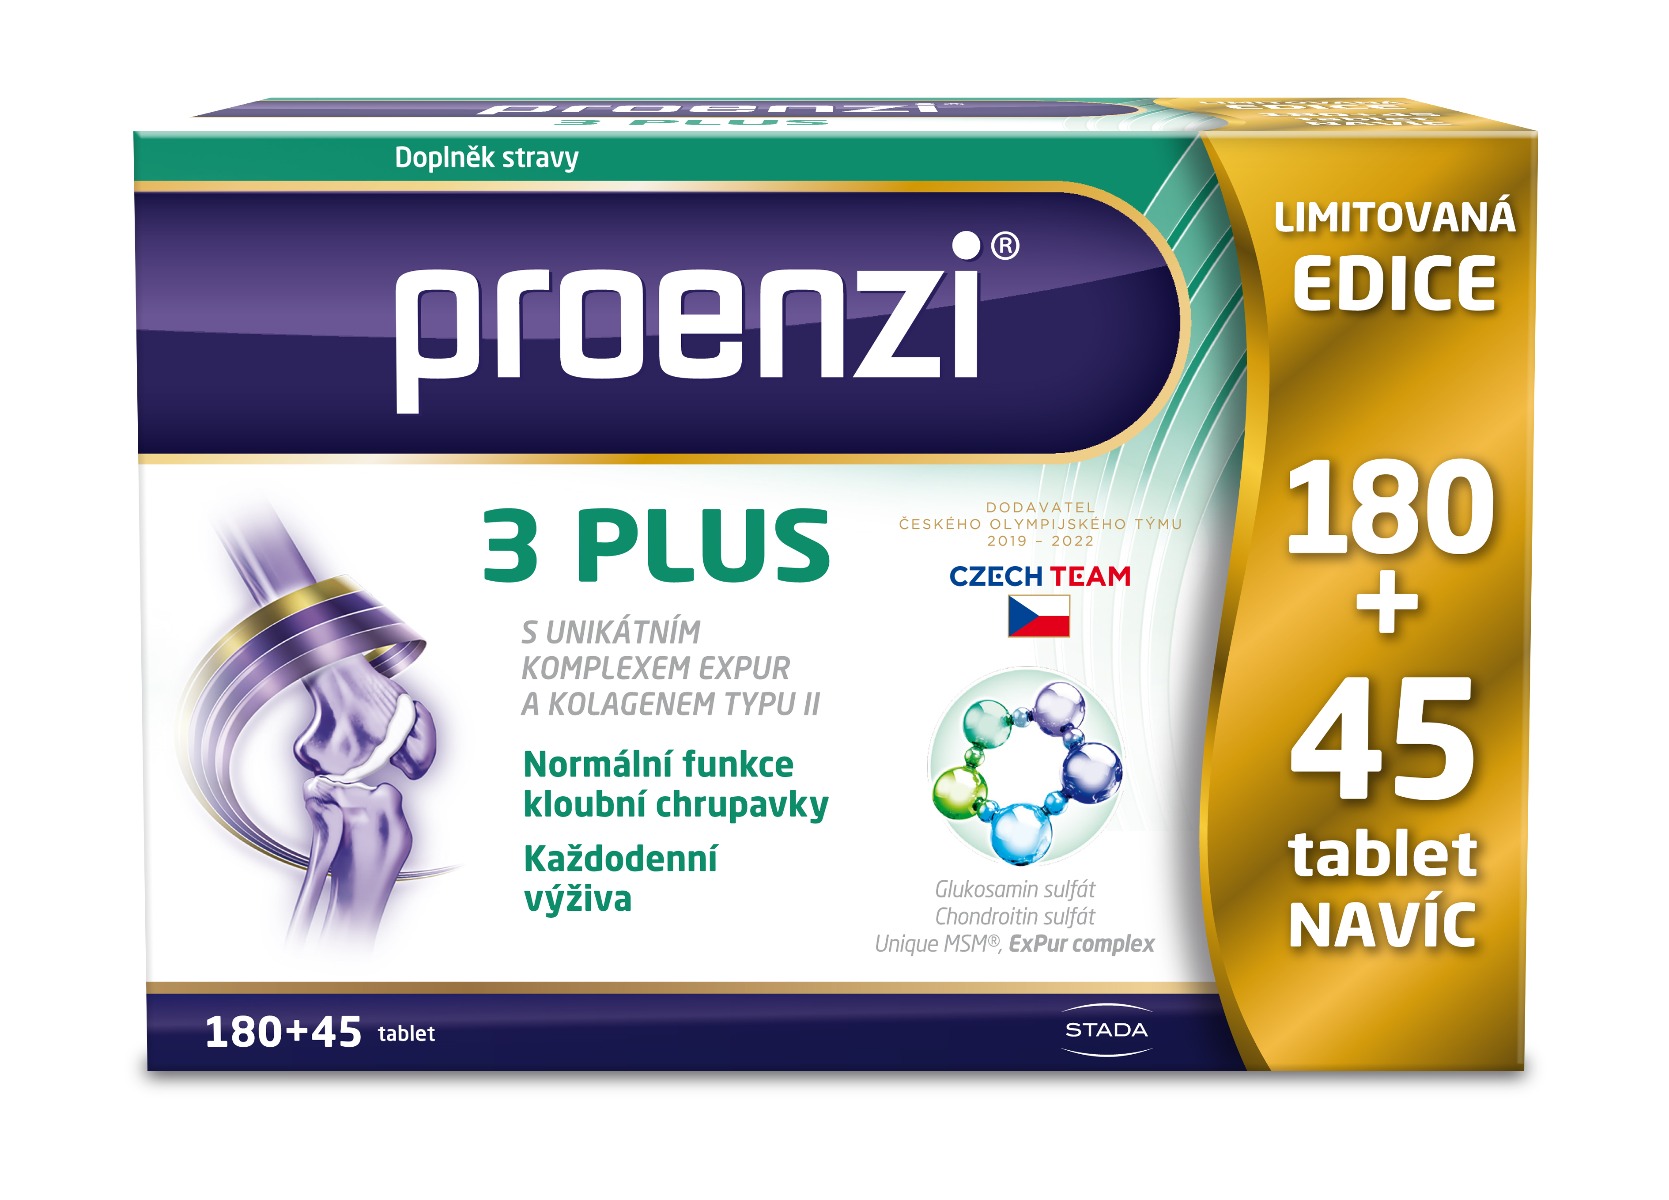 Proenzi 3 plus 180+45 tablet Proenzi